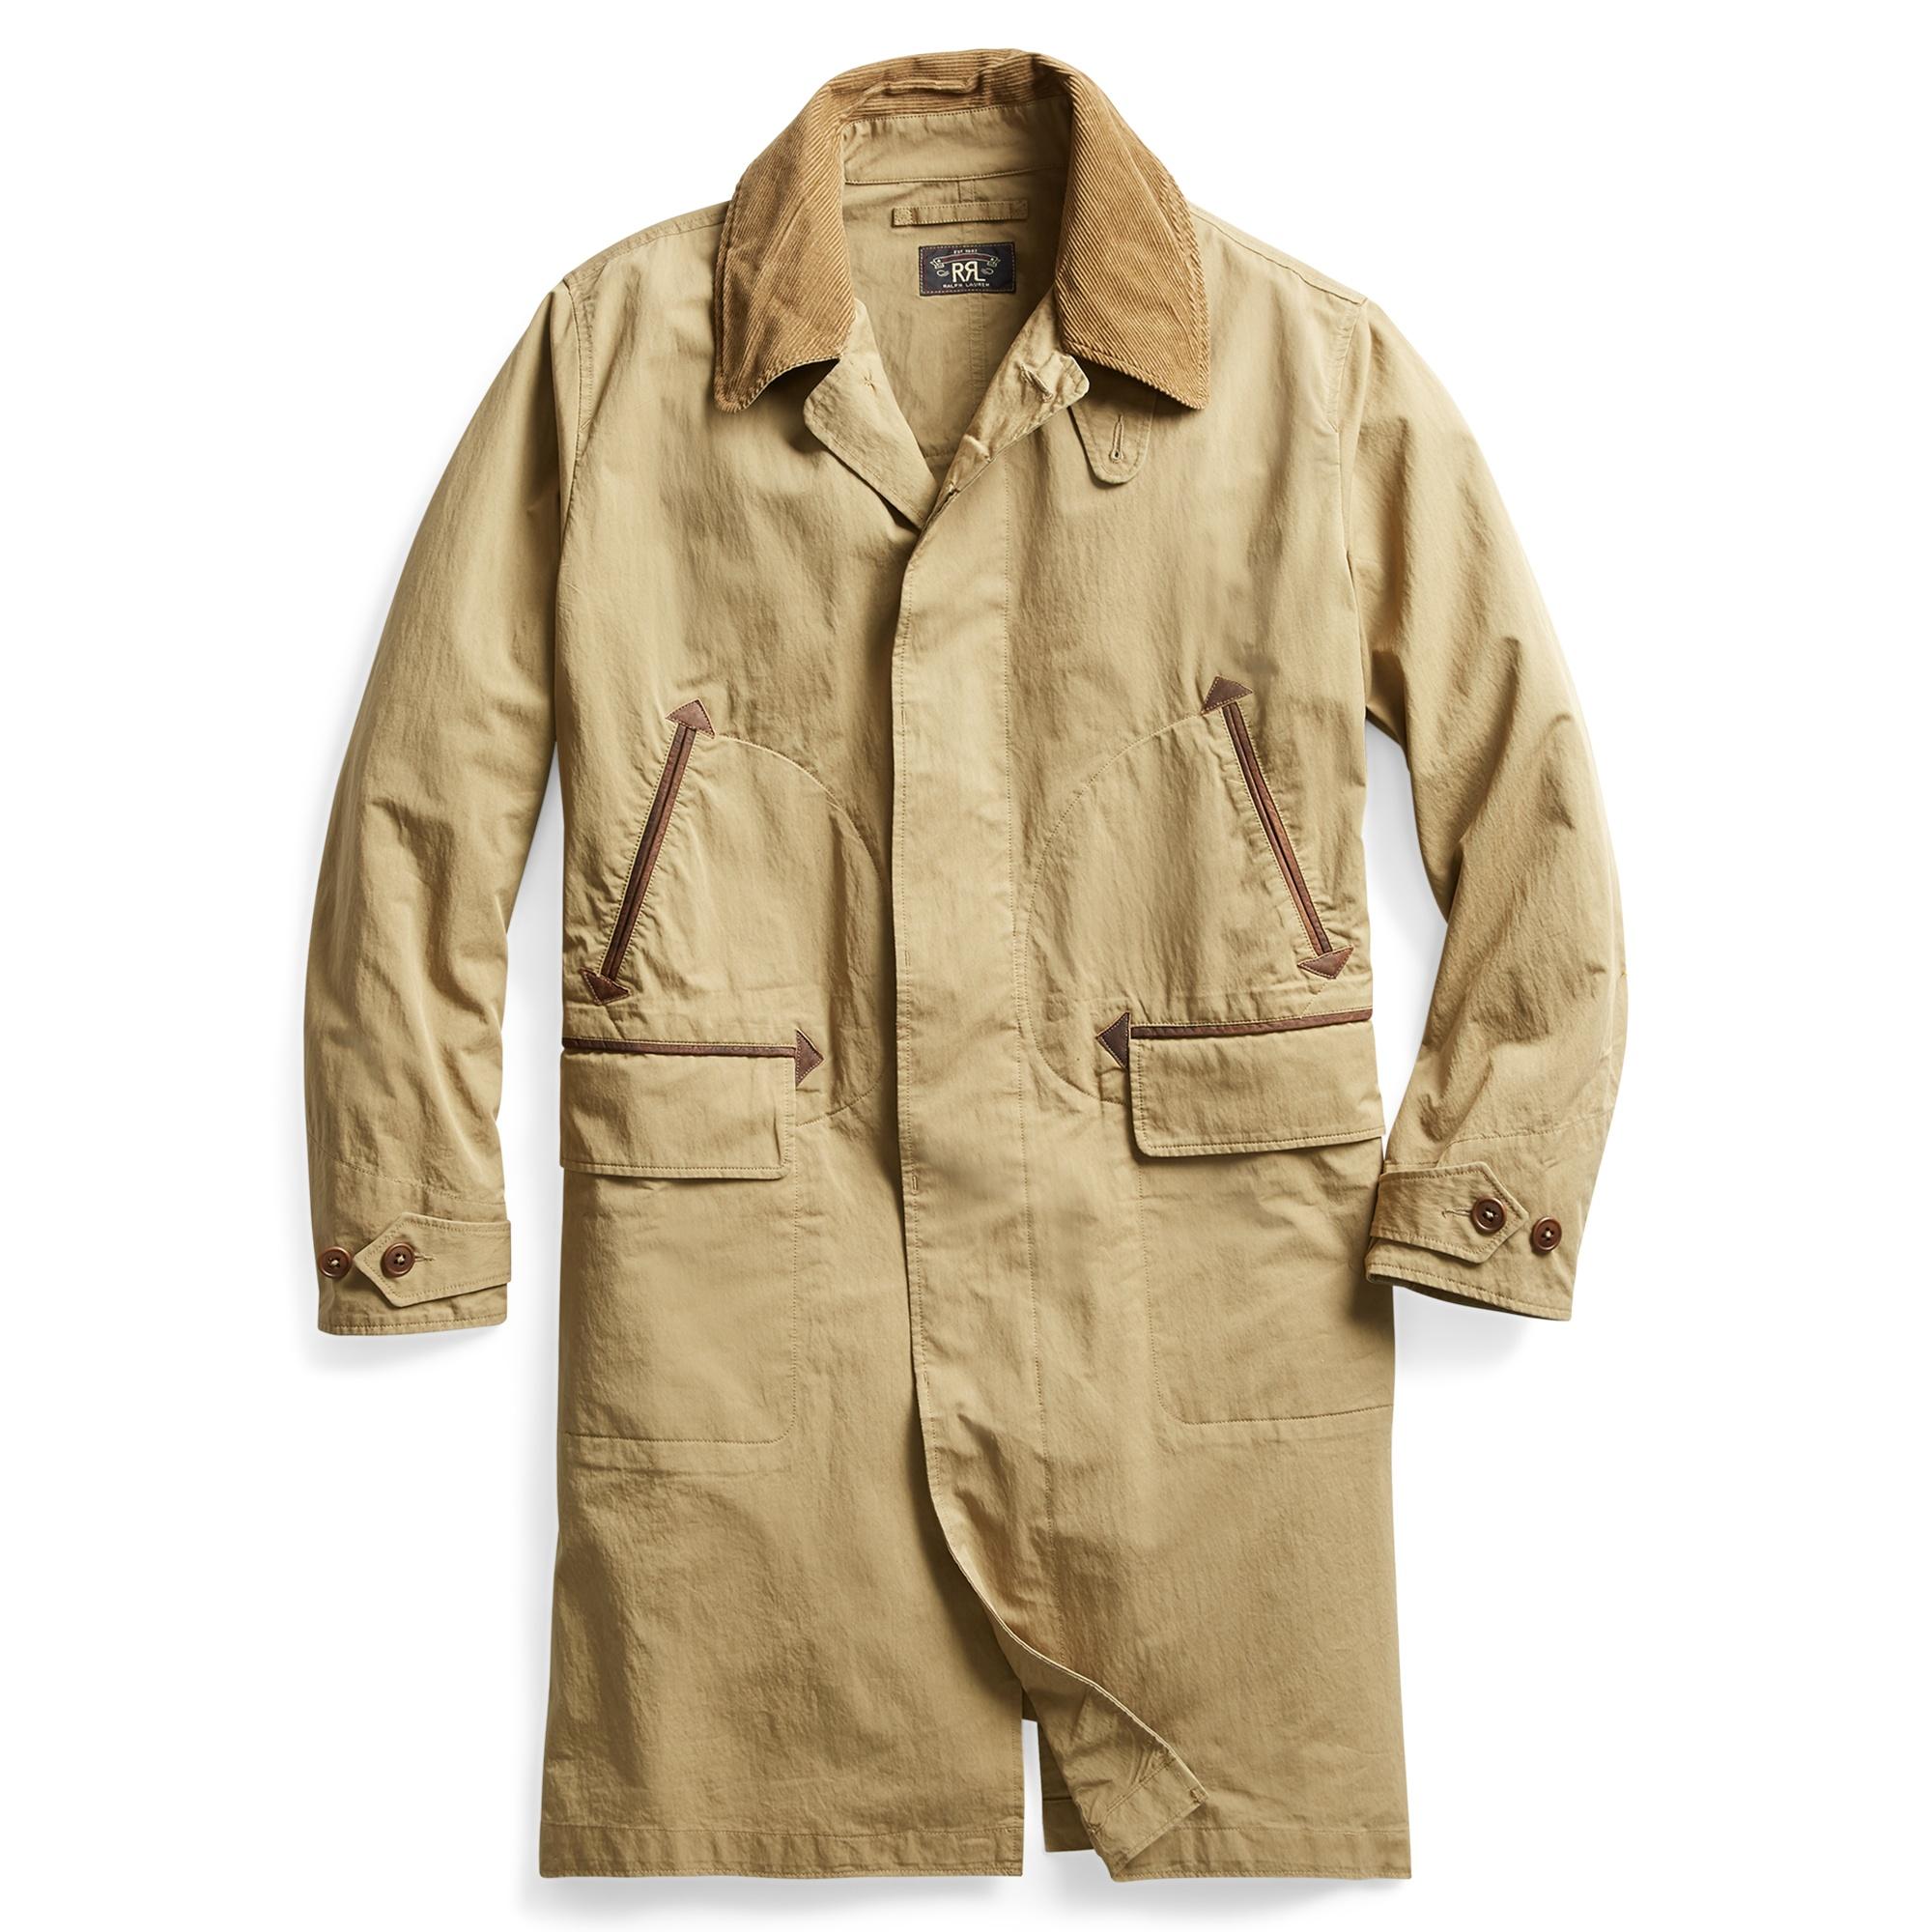 RRL Cotton Western Duster Jacket in Khaki (Natural) for Men - Lyst